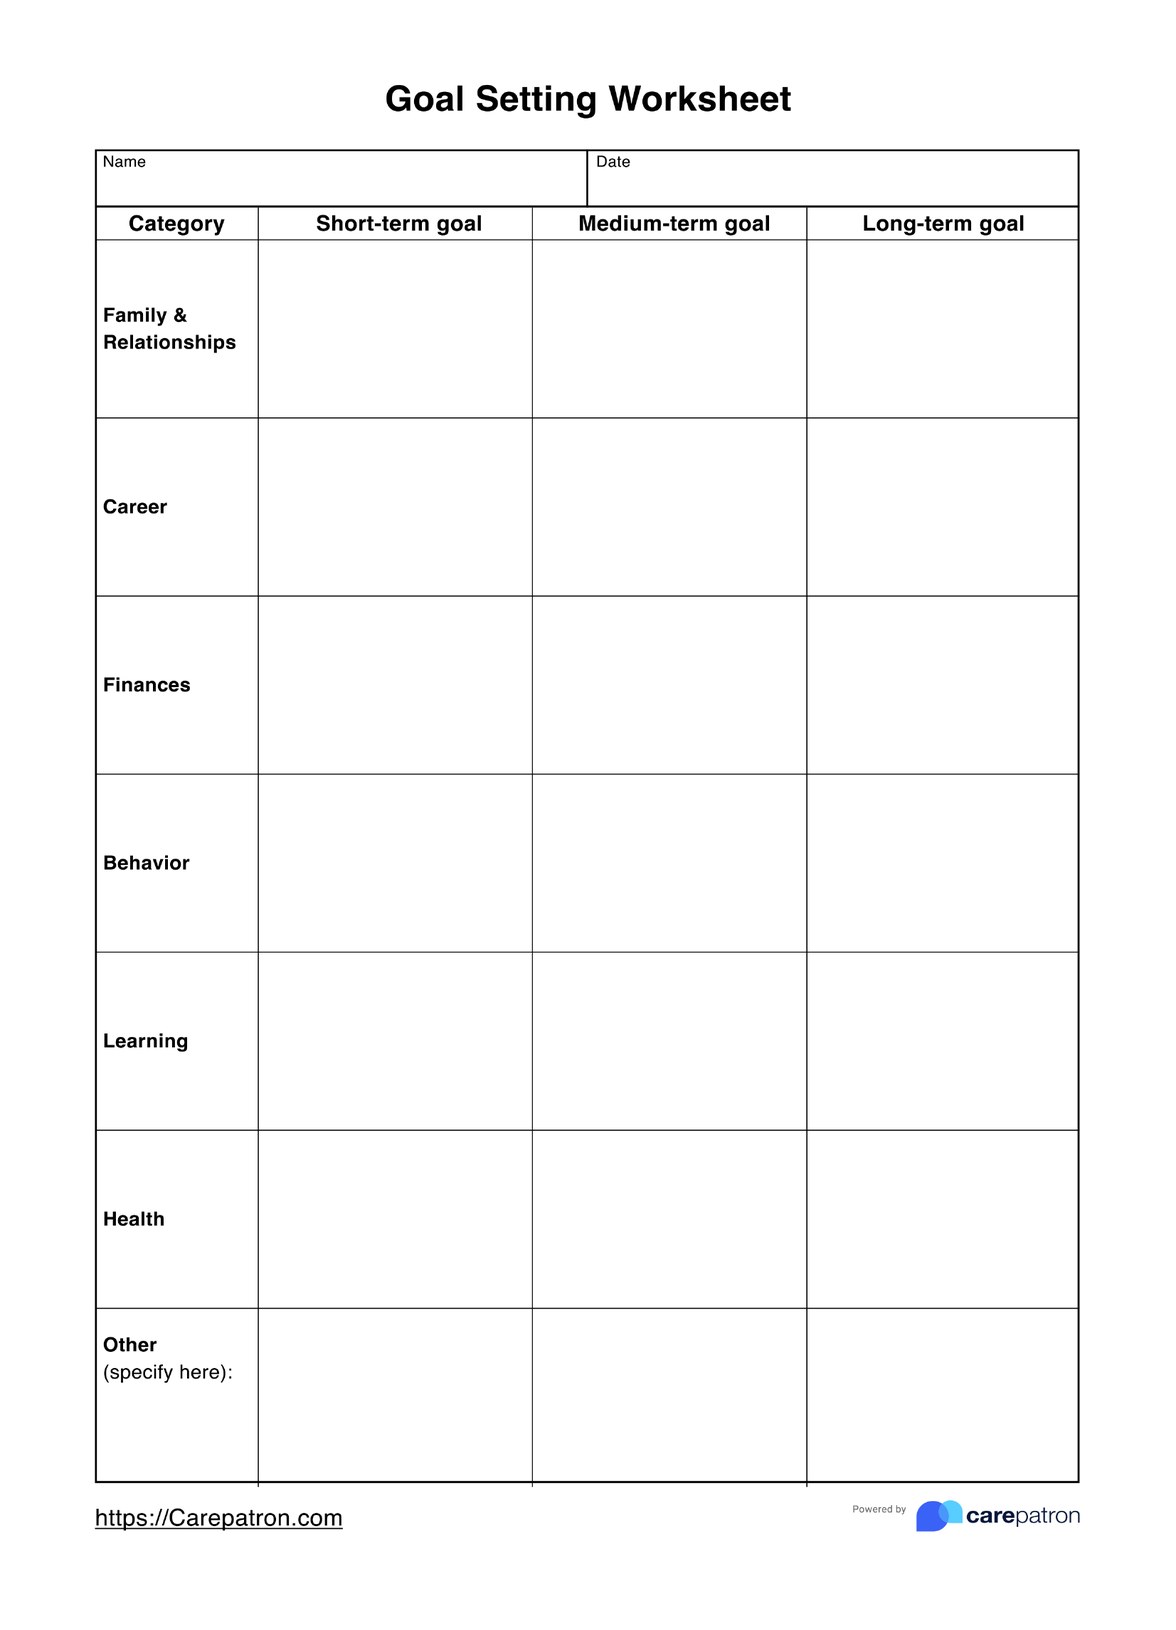 Goal Setting Worksheets PDF Example